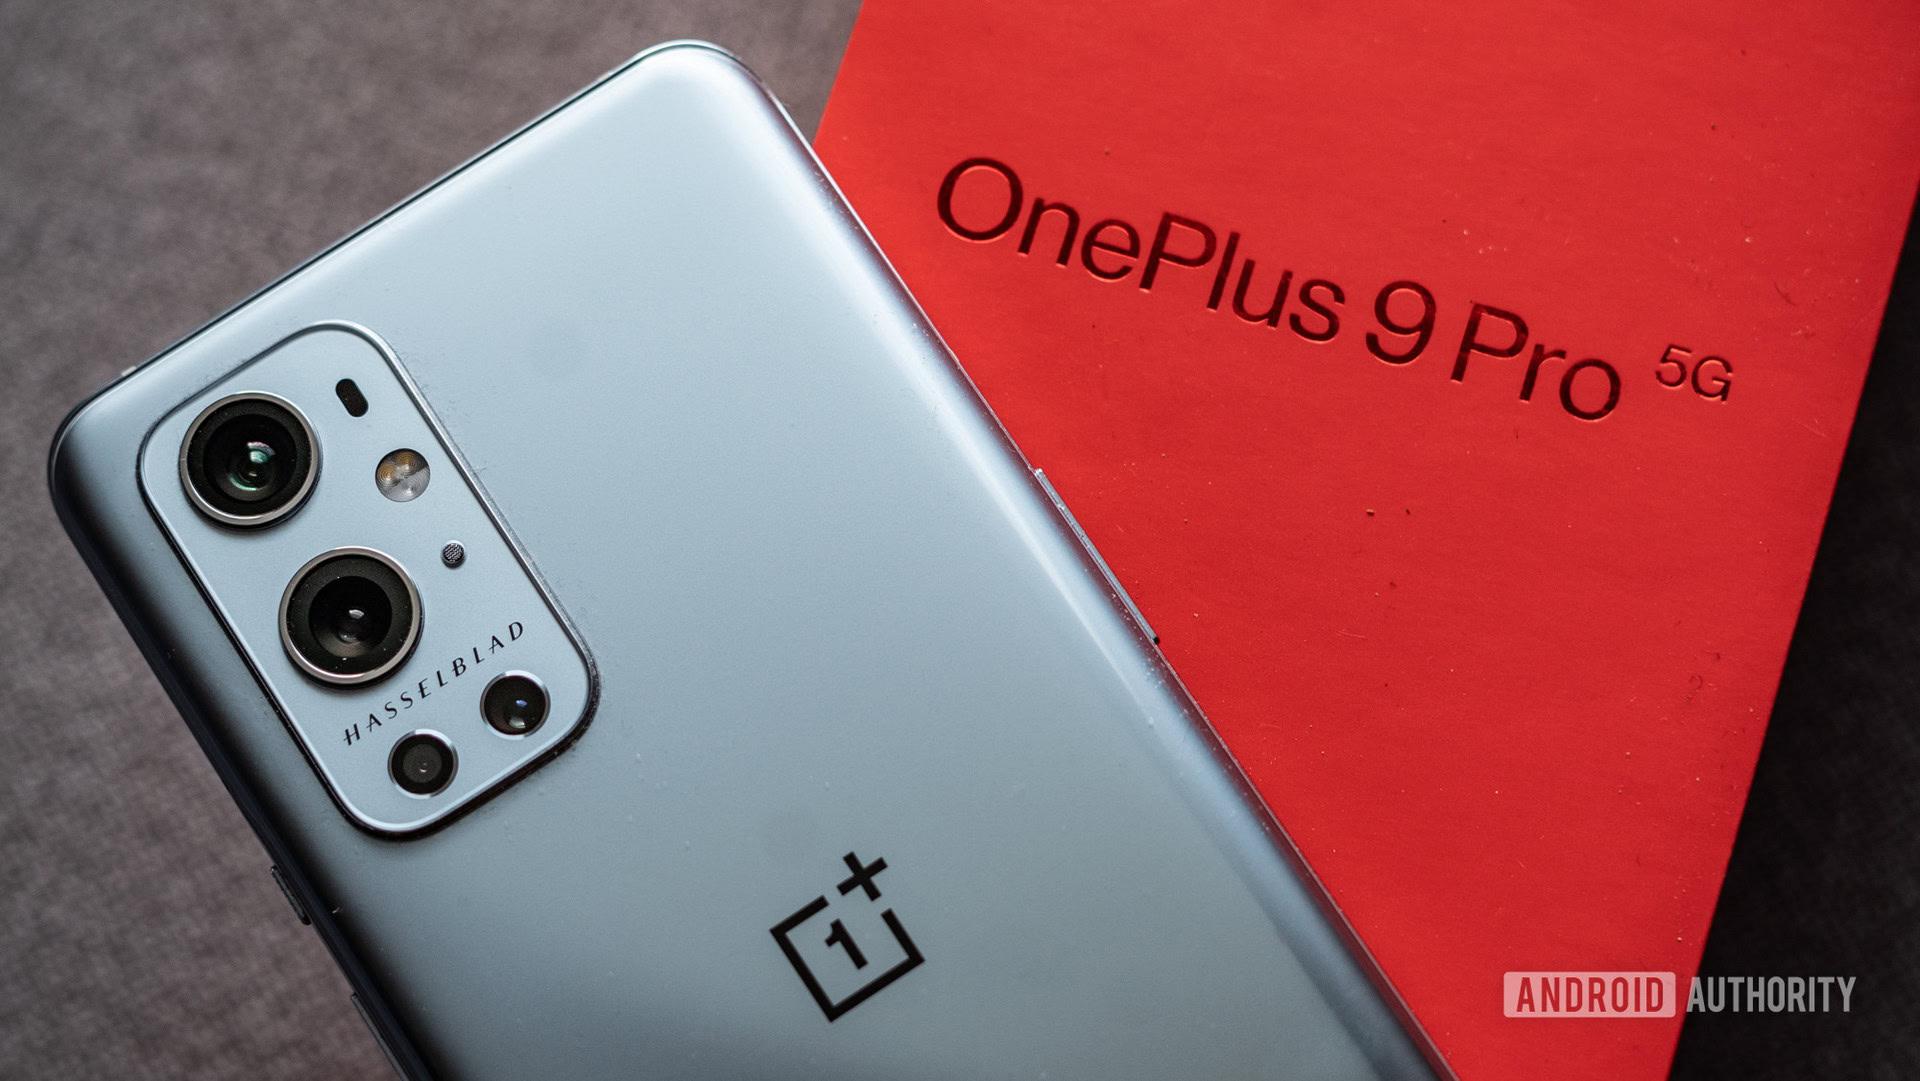 OnePlus 9 Pro close up of hassleblad